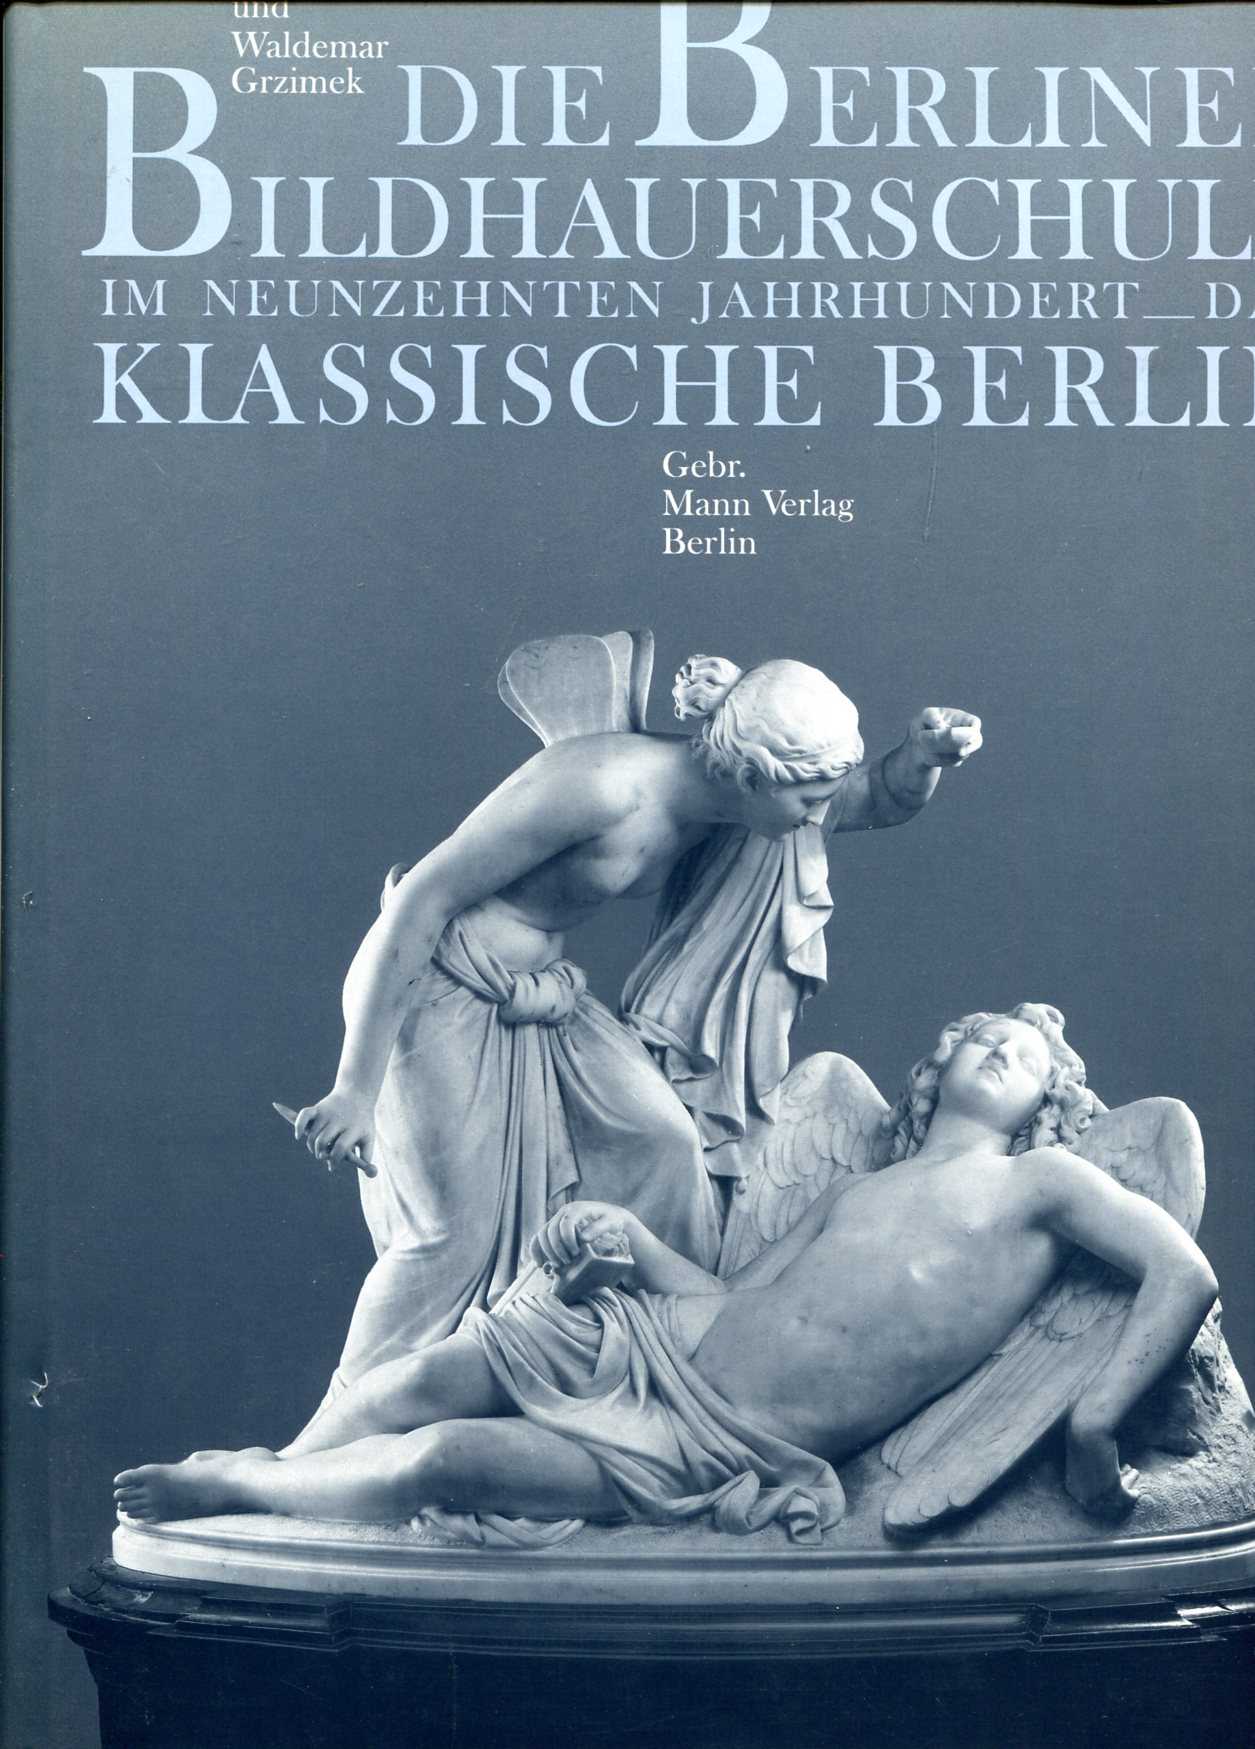 Die Berliner Bildhauerschule im neunzehnten Jahrhundert. Das klassische Berlin - Bloch, Peter & Grzimek, Waldemar